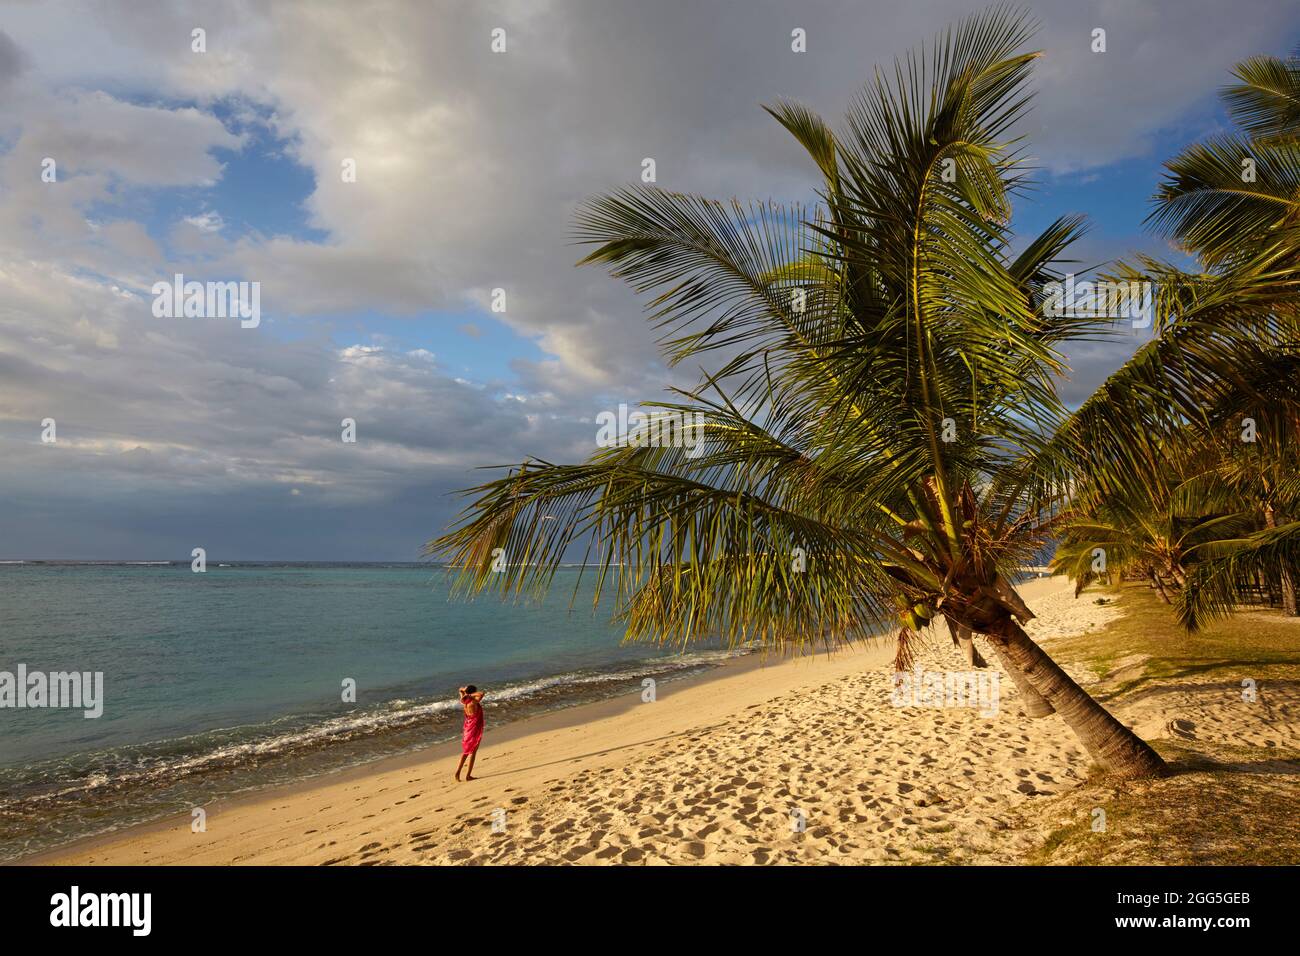 The beach in Le Morne Brabant, Mauritius Stock Photo